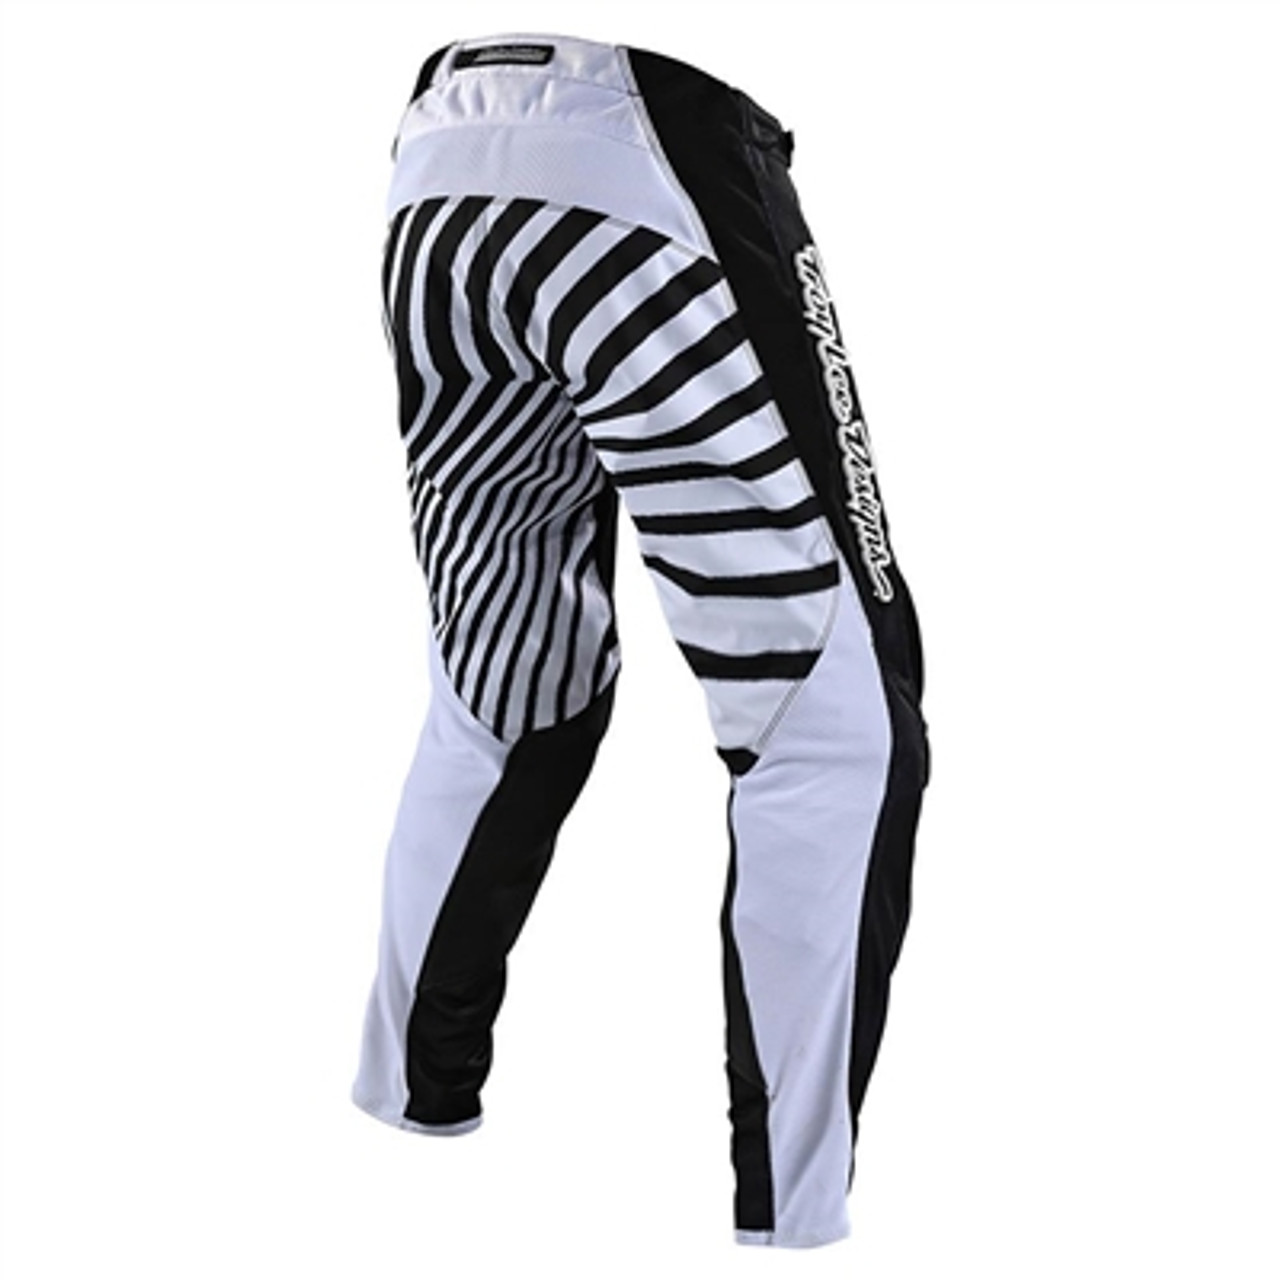 Troy Lee Designs 2020 GP Air Pants - Drift Black/White